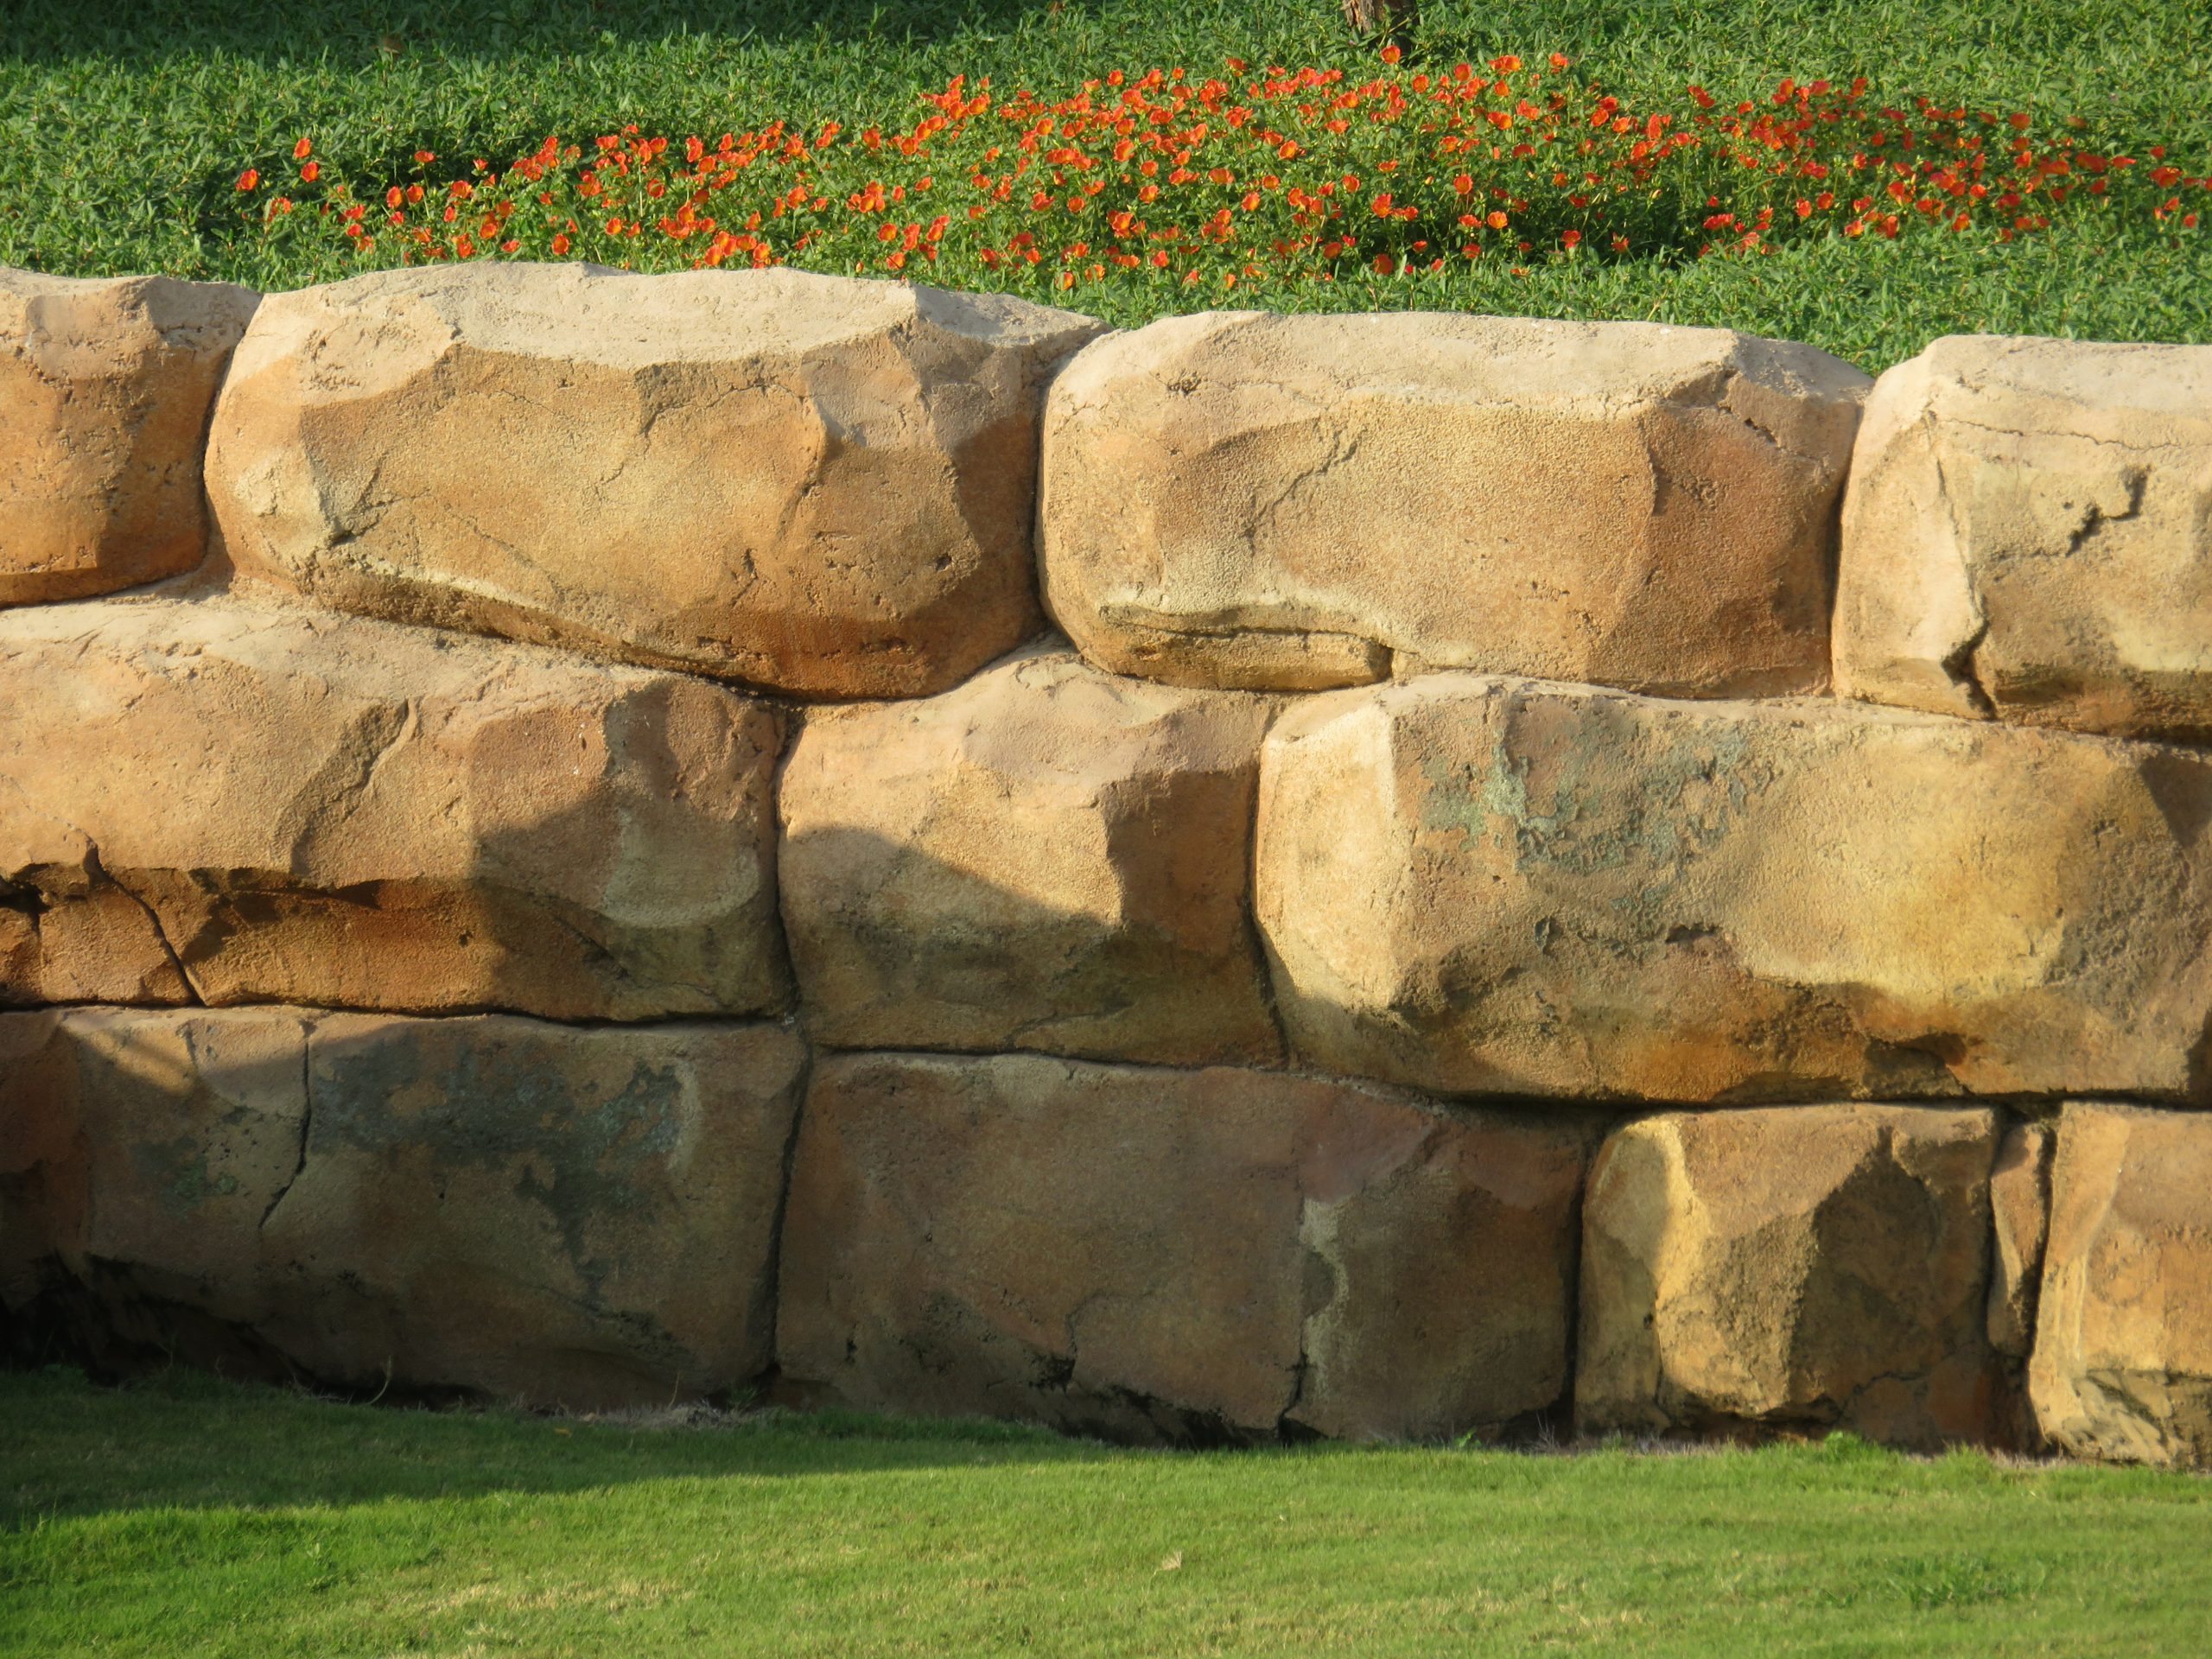 a stone enclosure